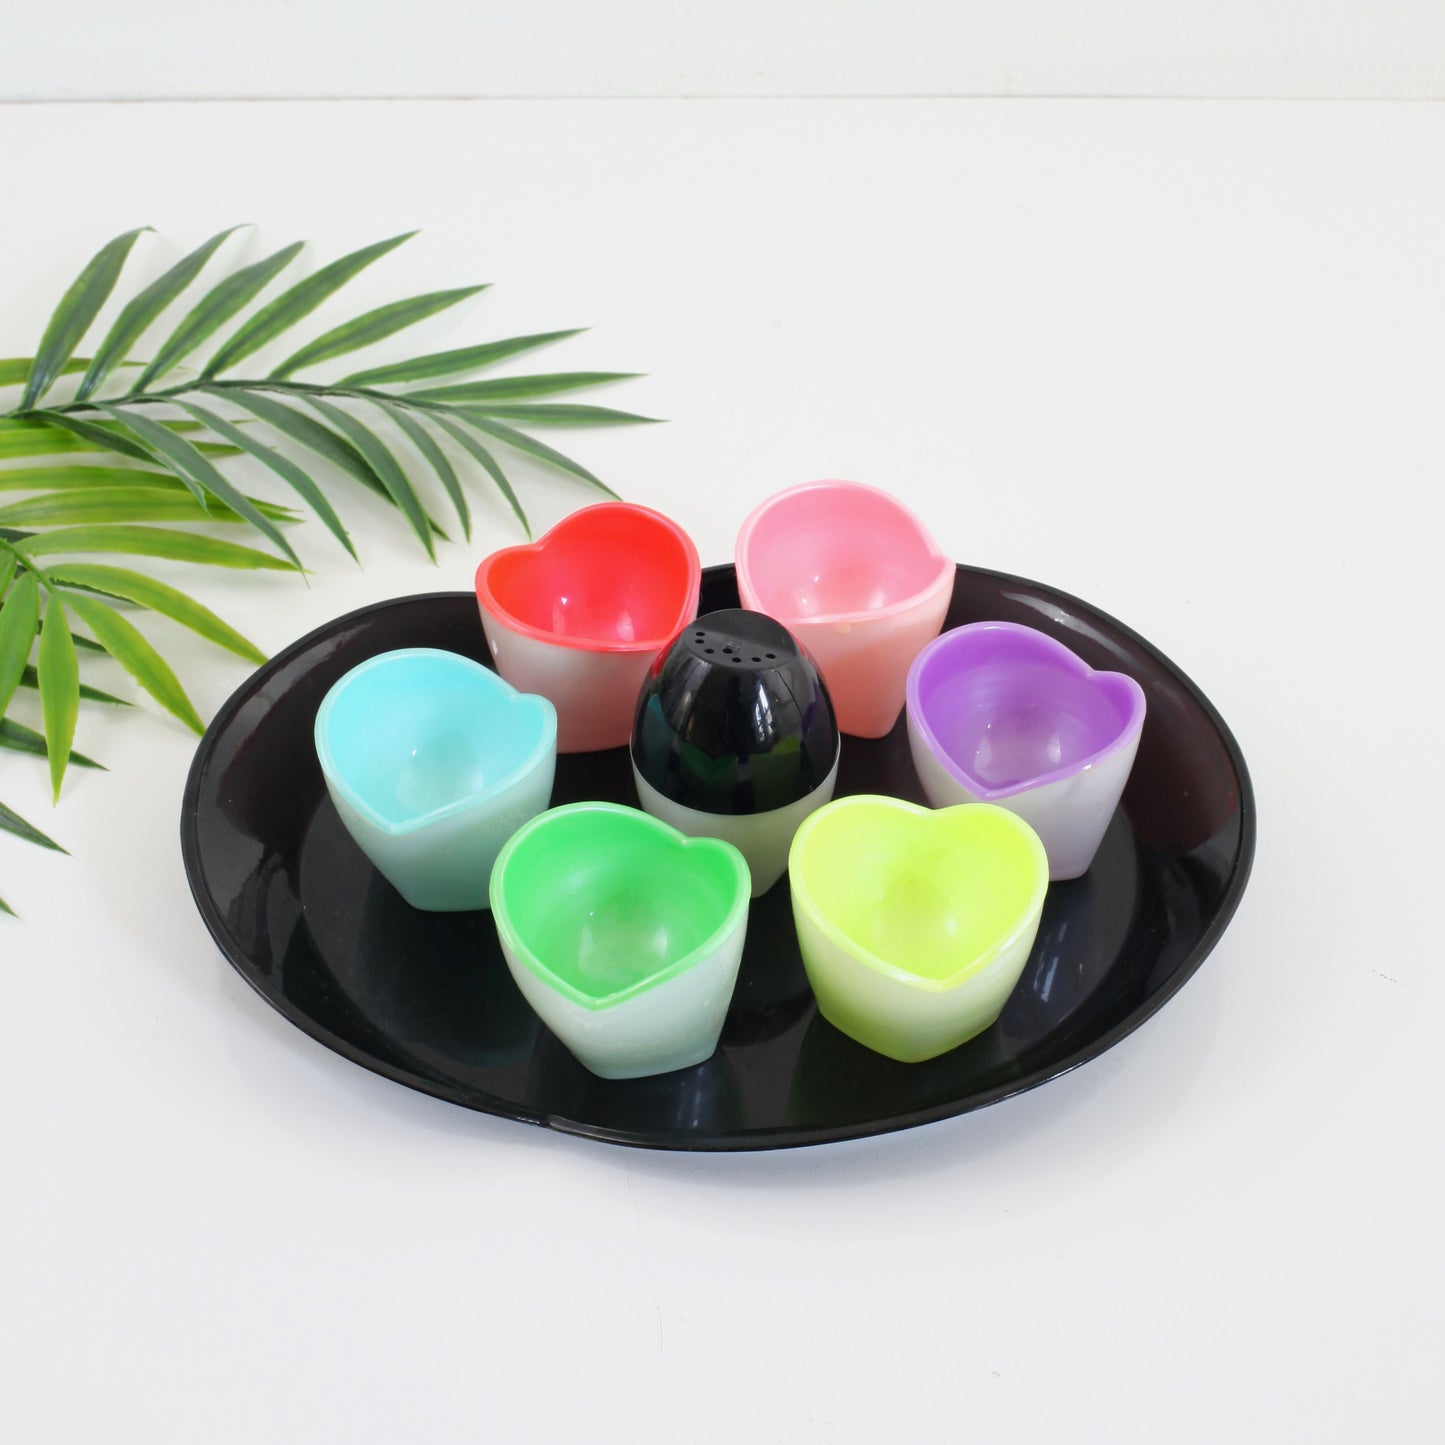 SOLD - Vintage Colorful Plastic Egg Cups Set / DBGM Germany